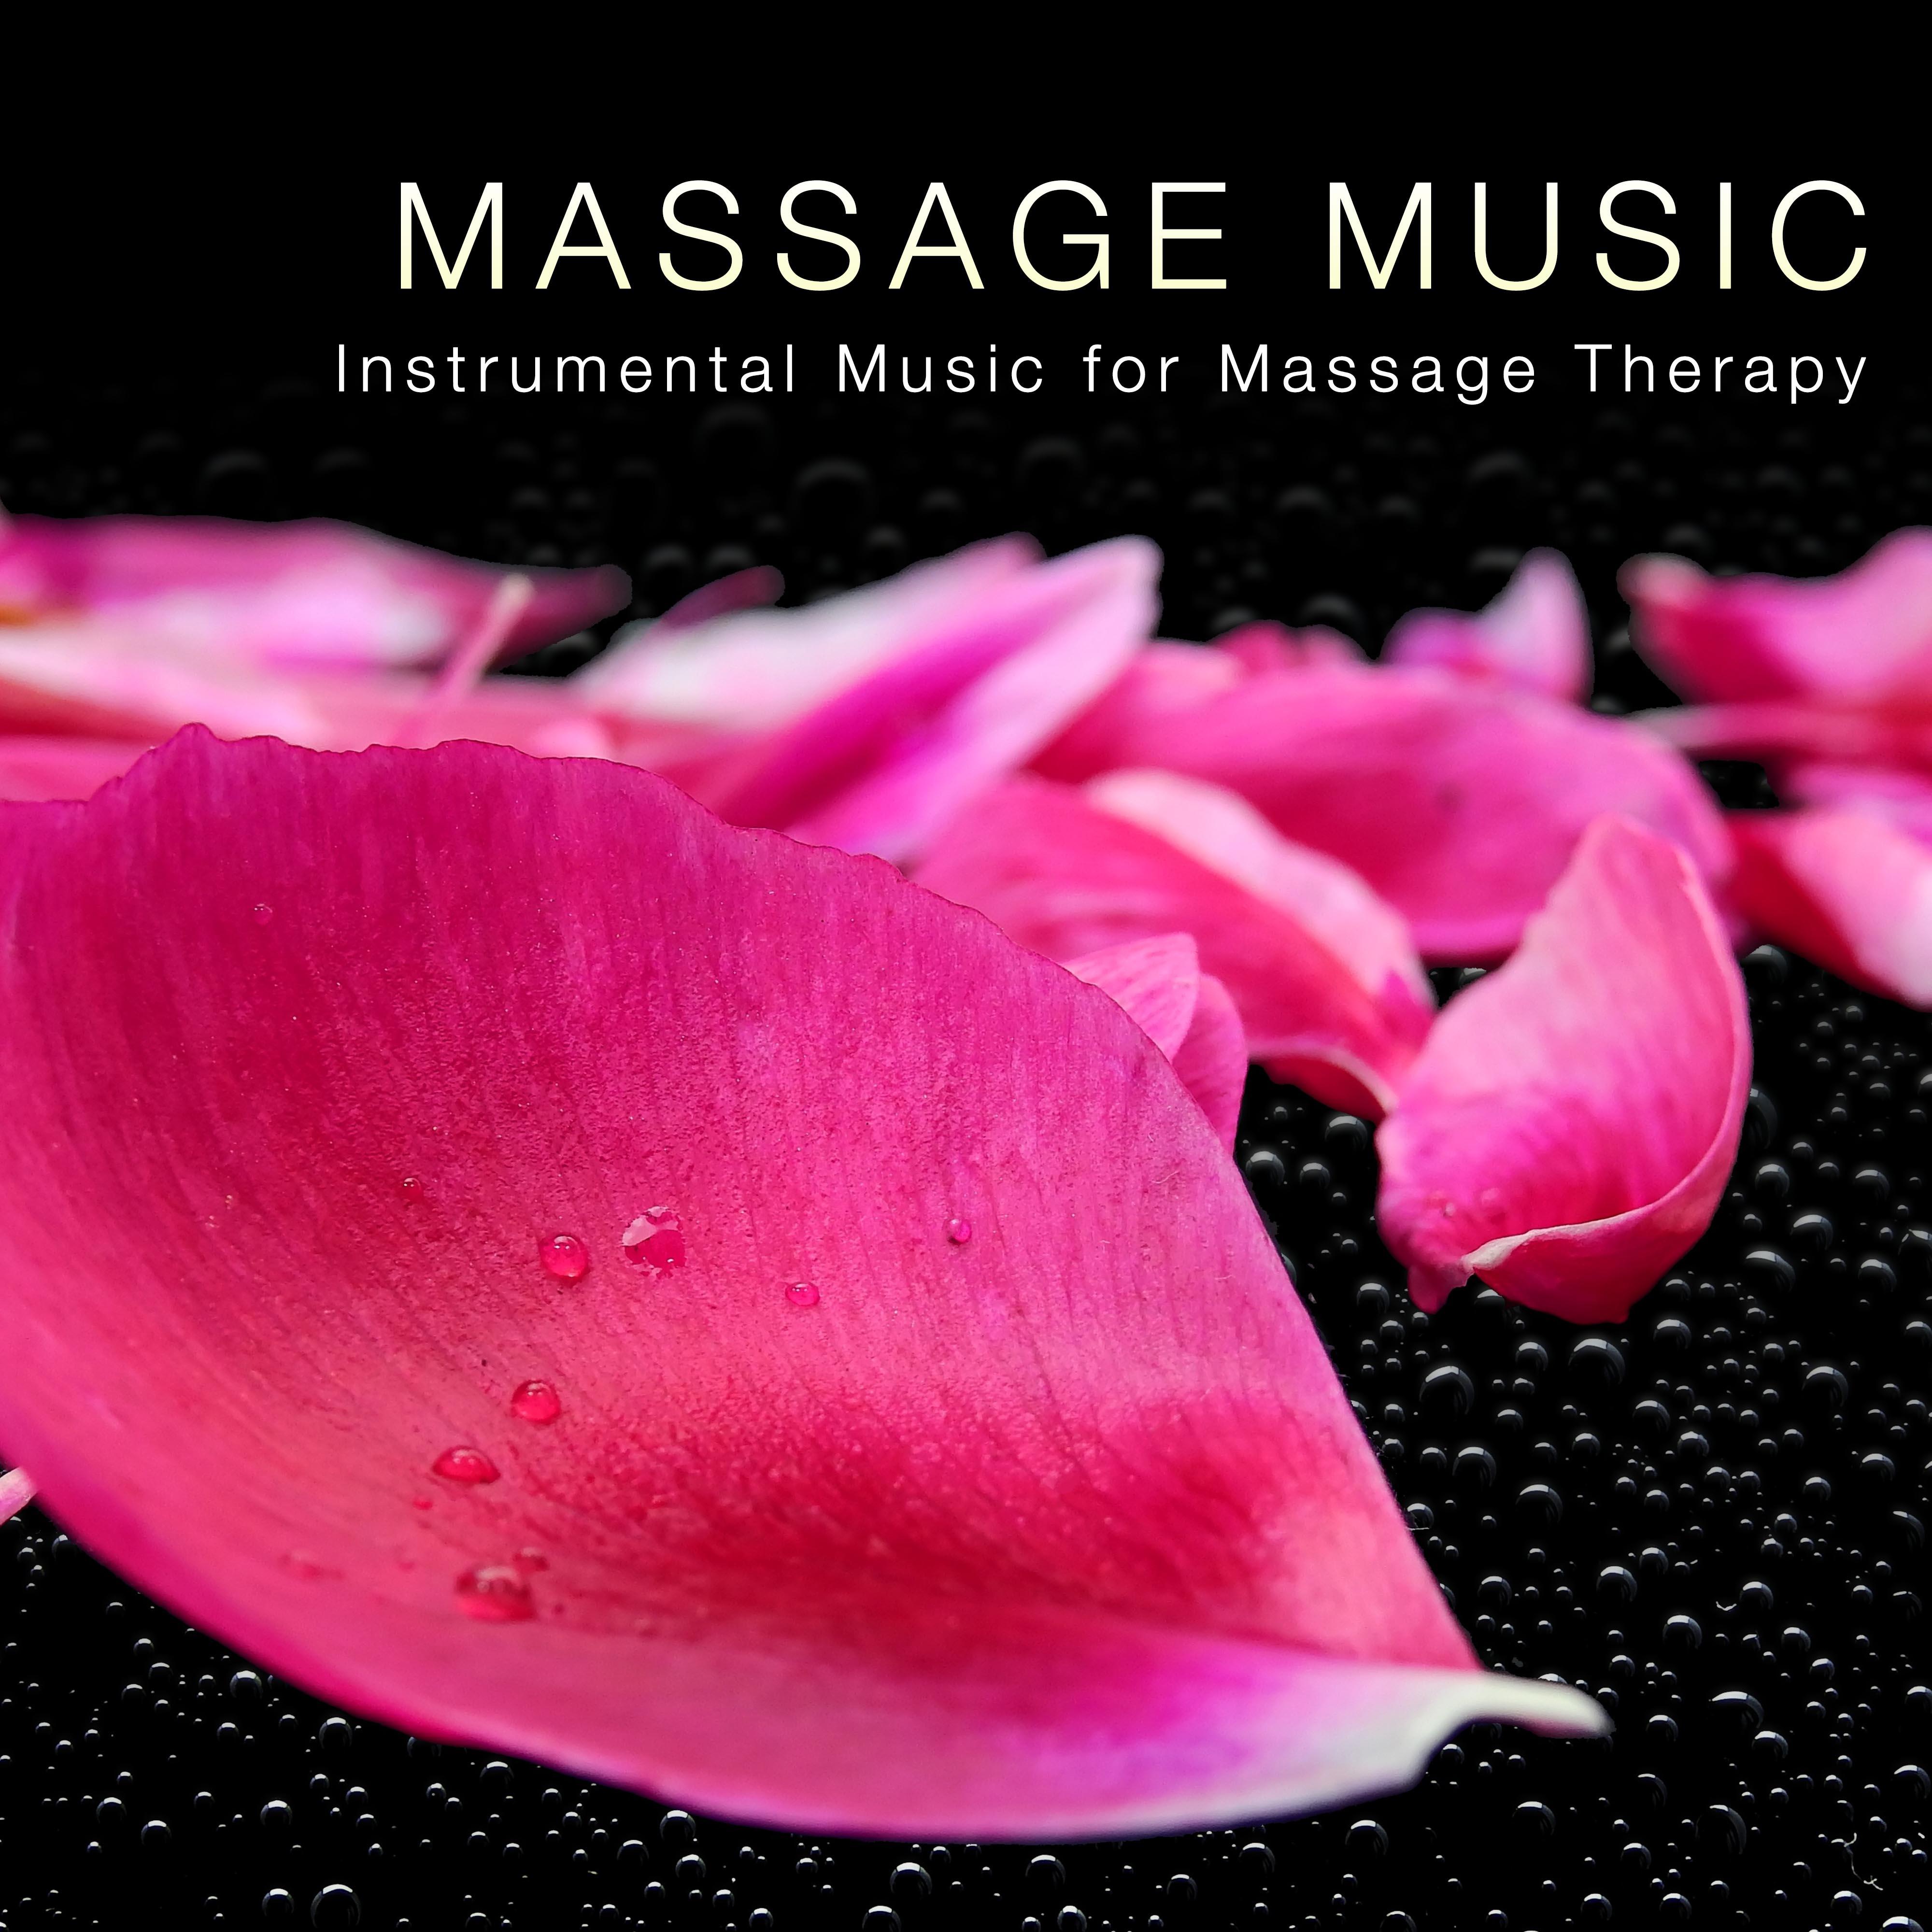 Massage Music: Instrumental Music for Massage Therapy, Tantra Massage, Happy Ending Massage and Erotic Massage